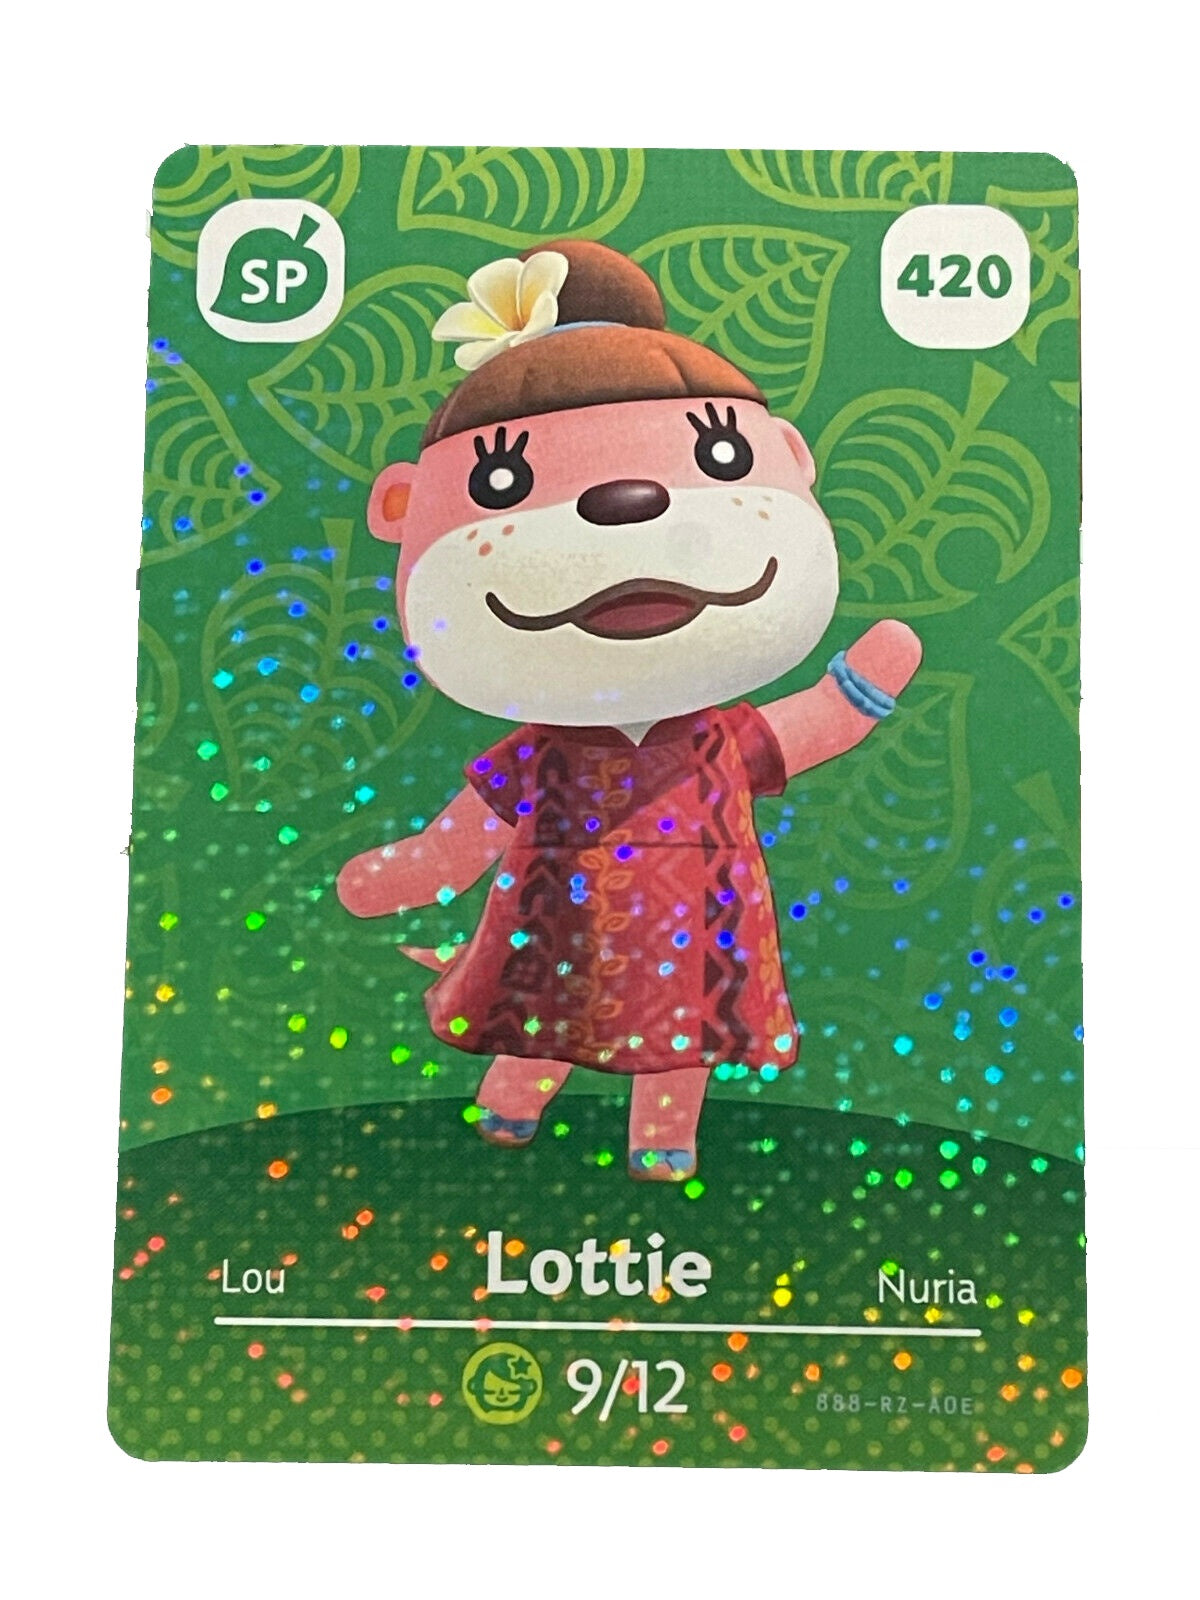 420 Lottie SP Authentic Animal Crossing Amiibo Card - Series 5